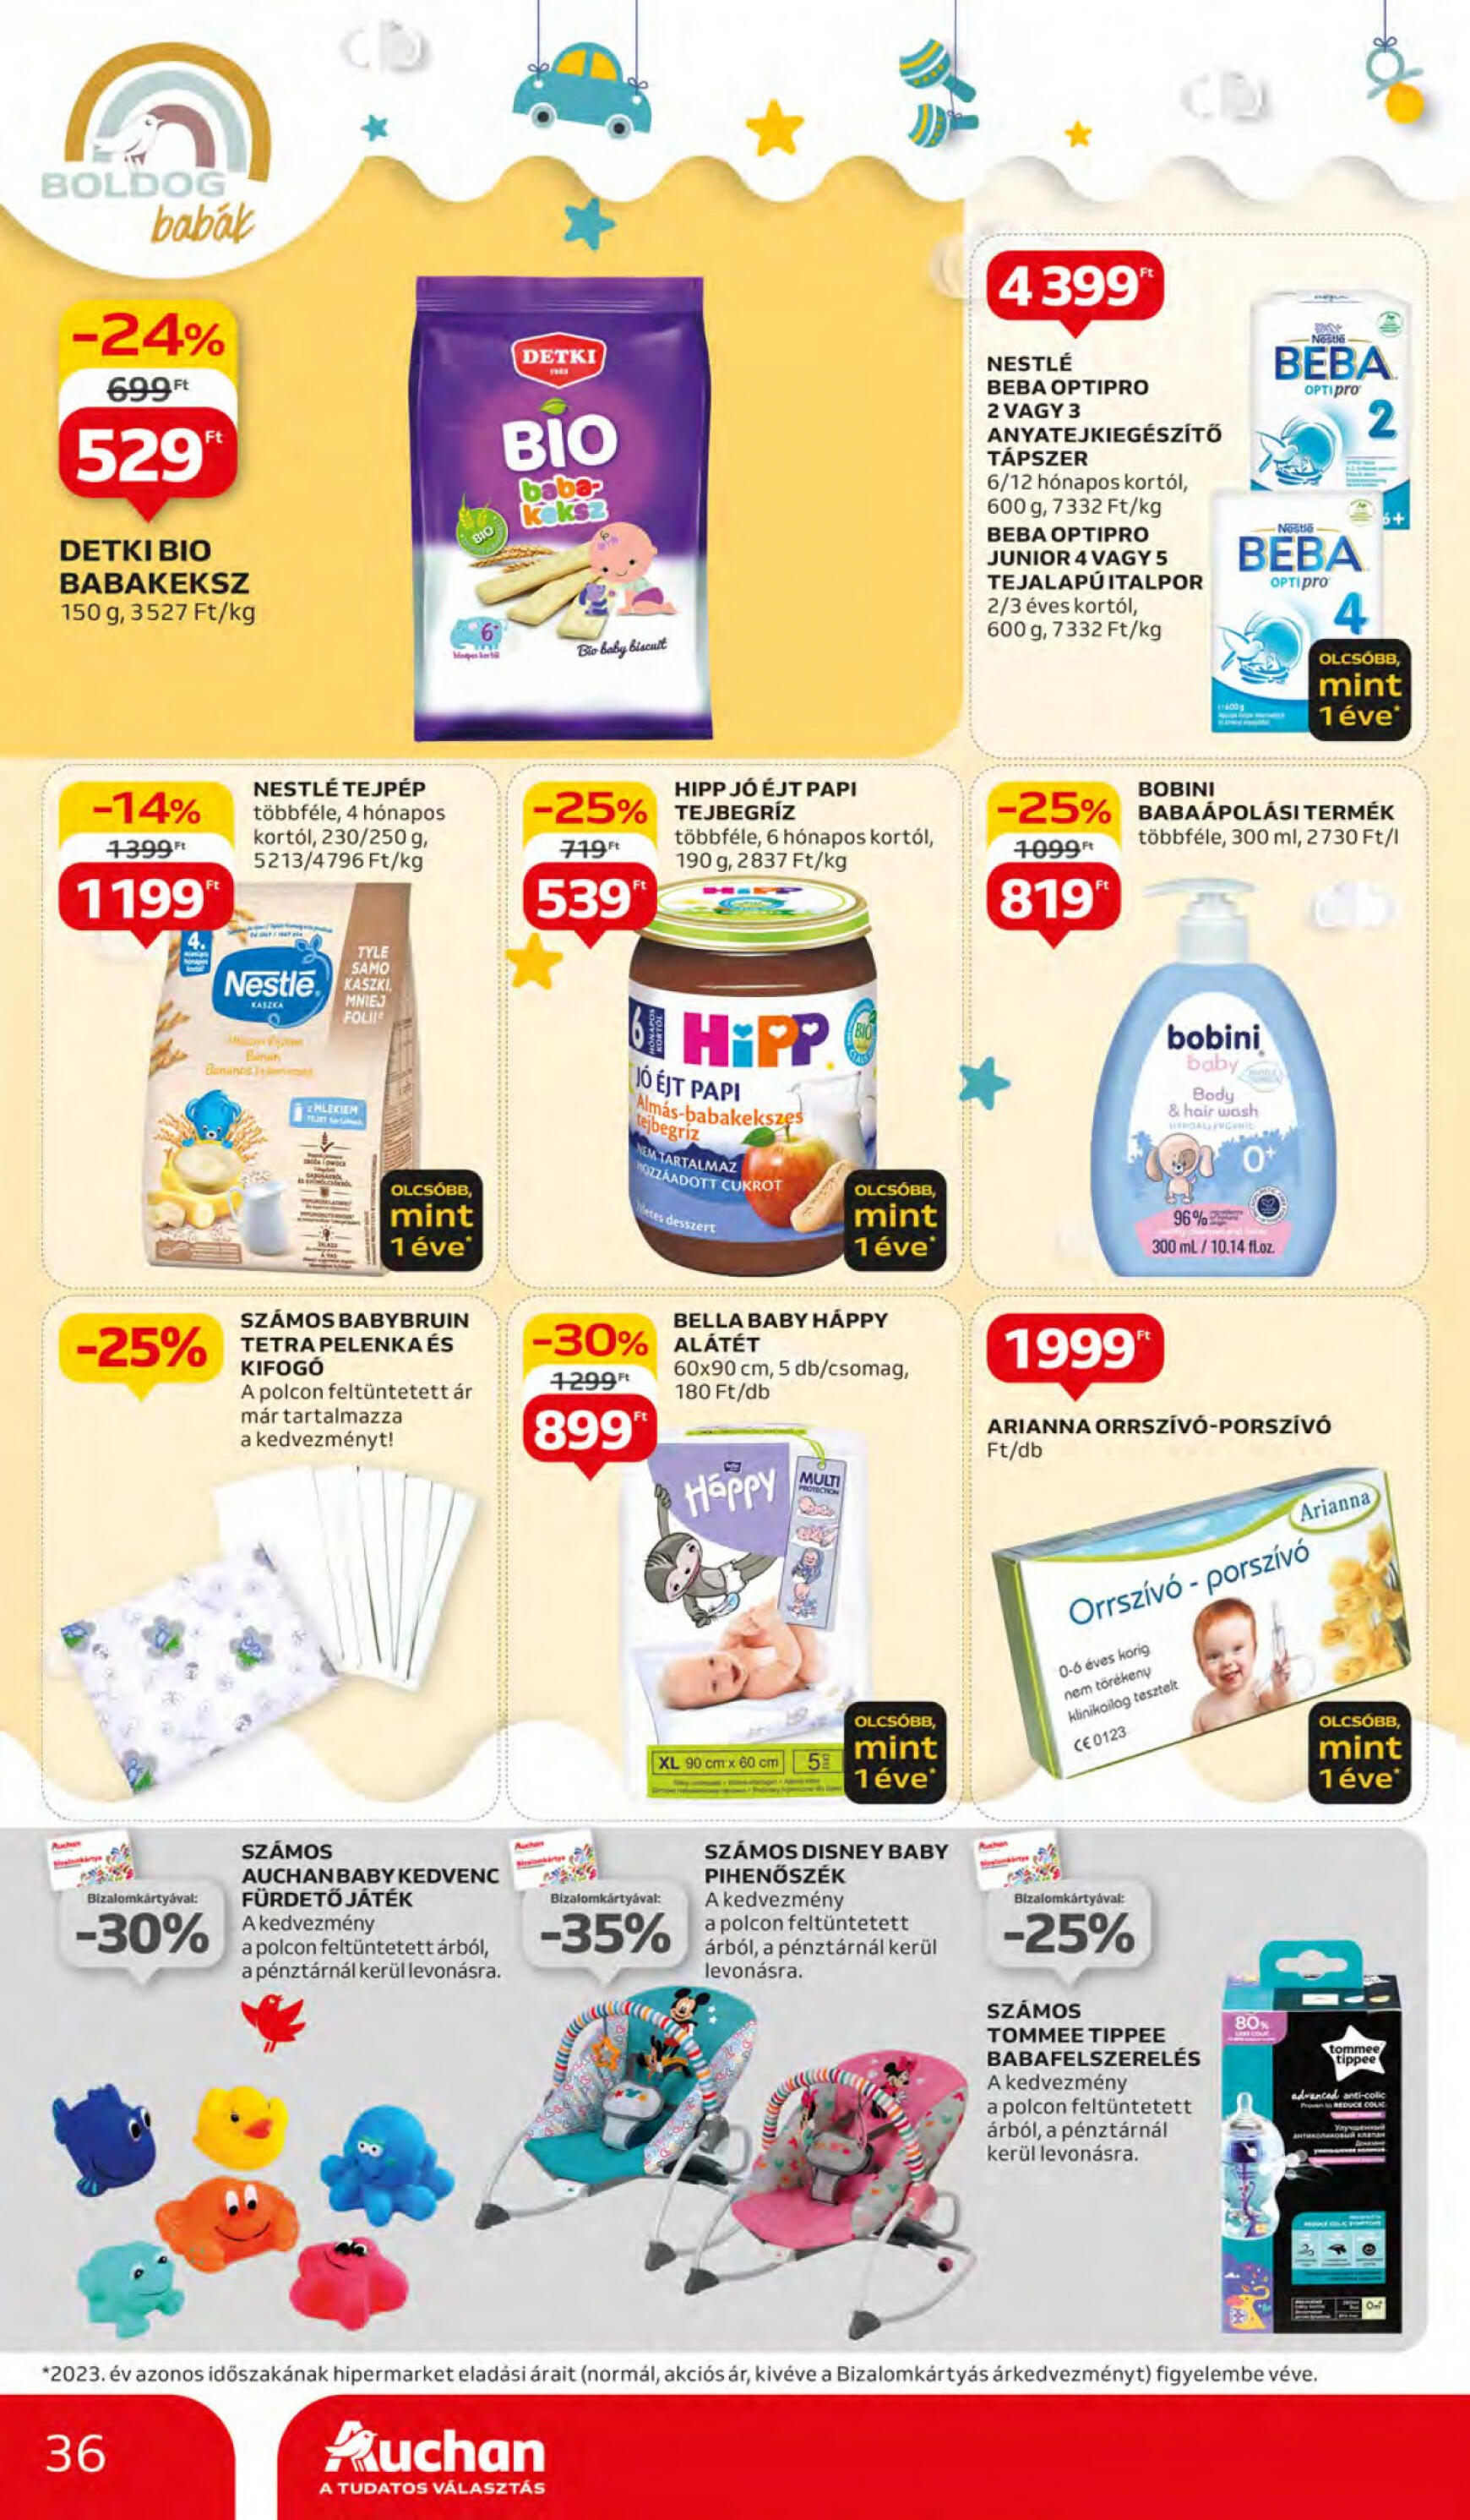 auchan - Aktuális újság Auchan 04.11. - 04.17. - page: 36